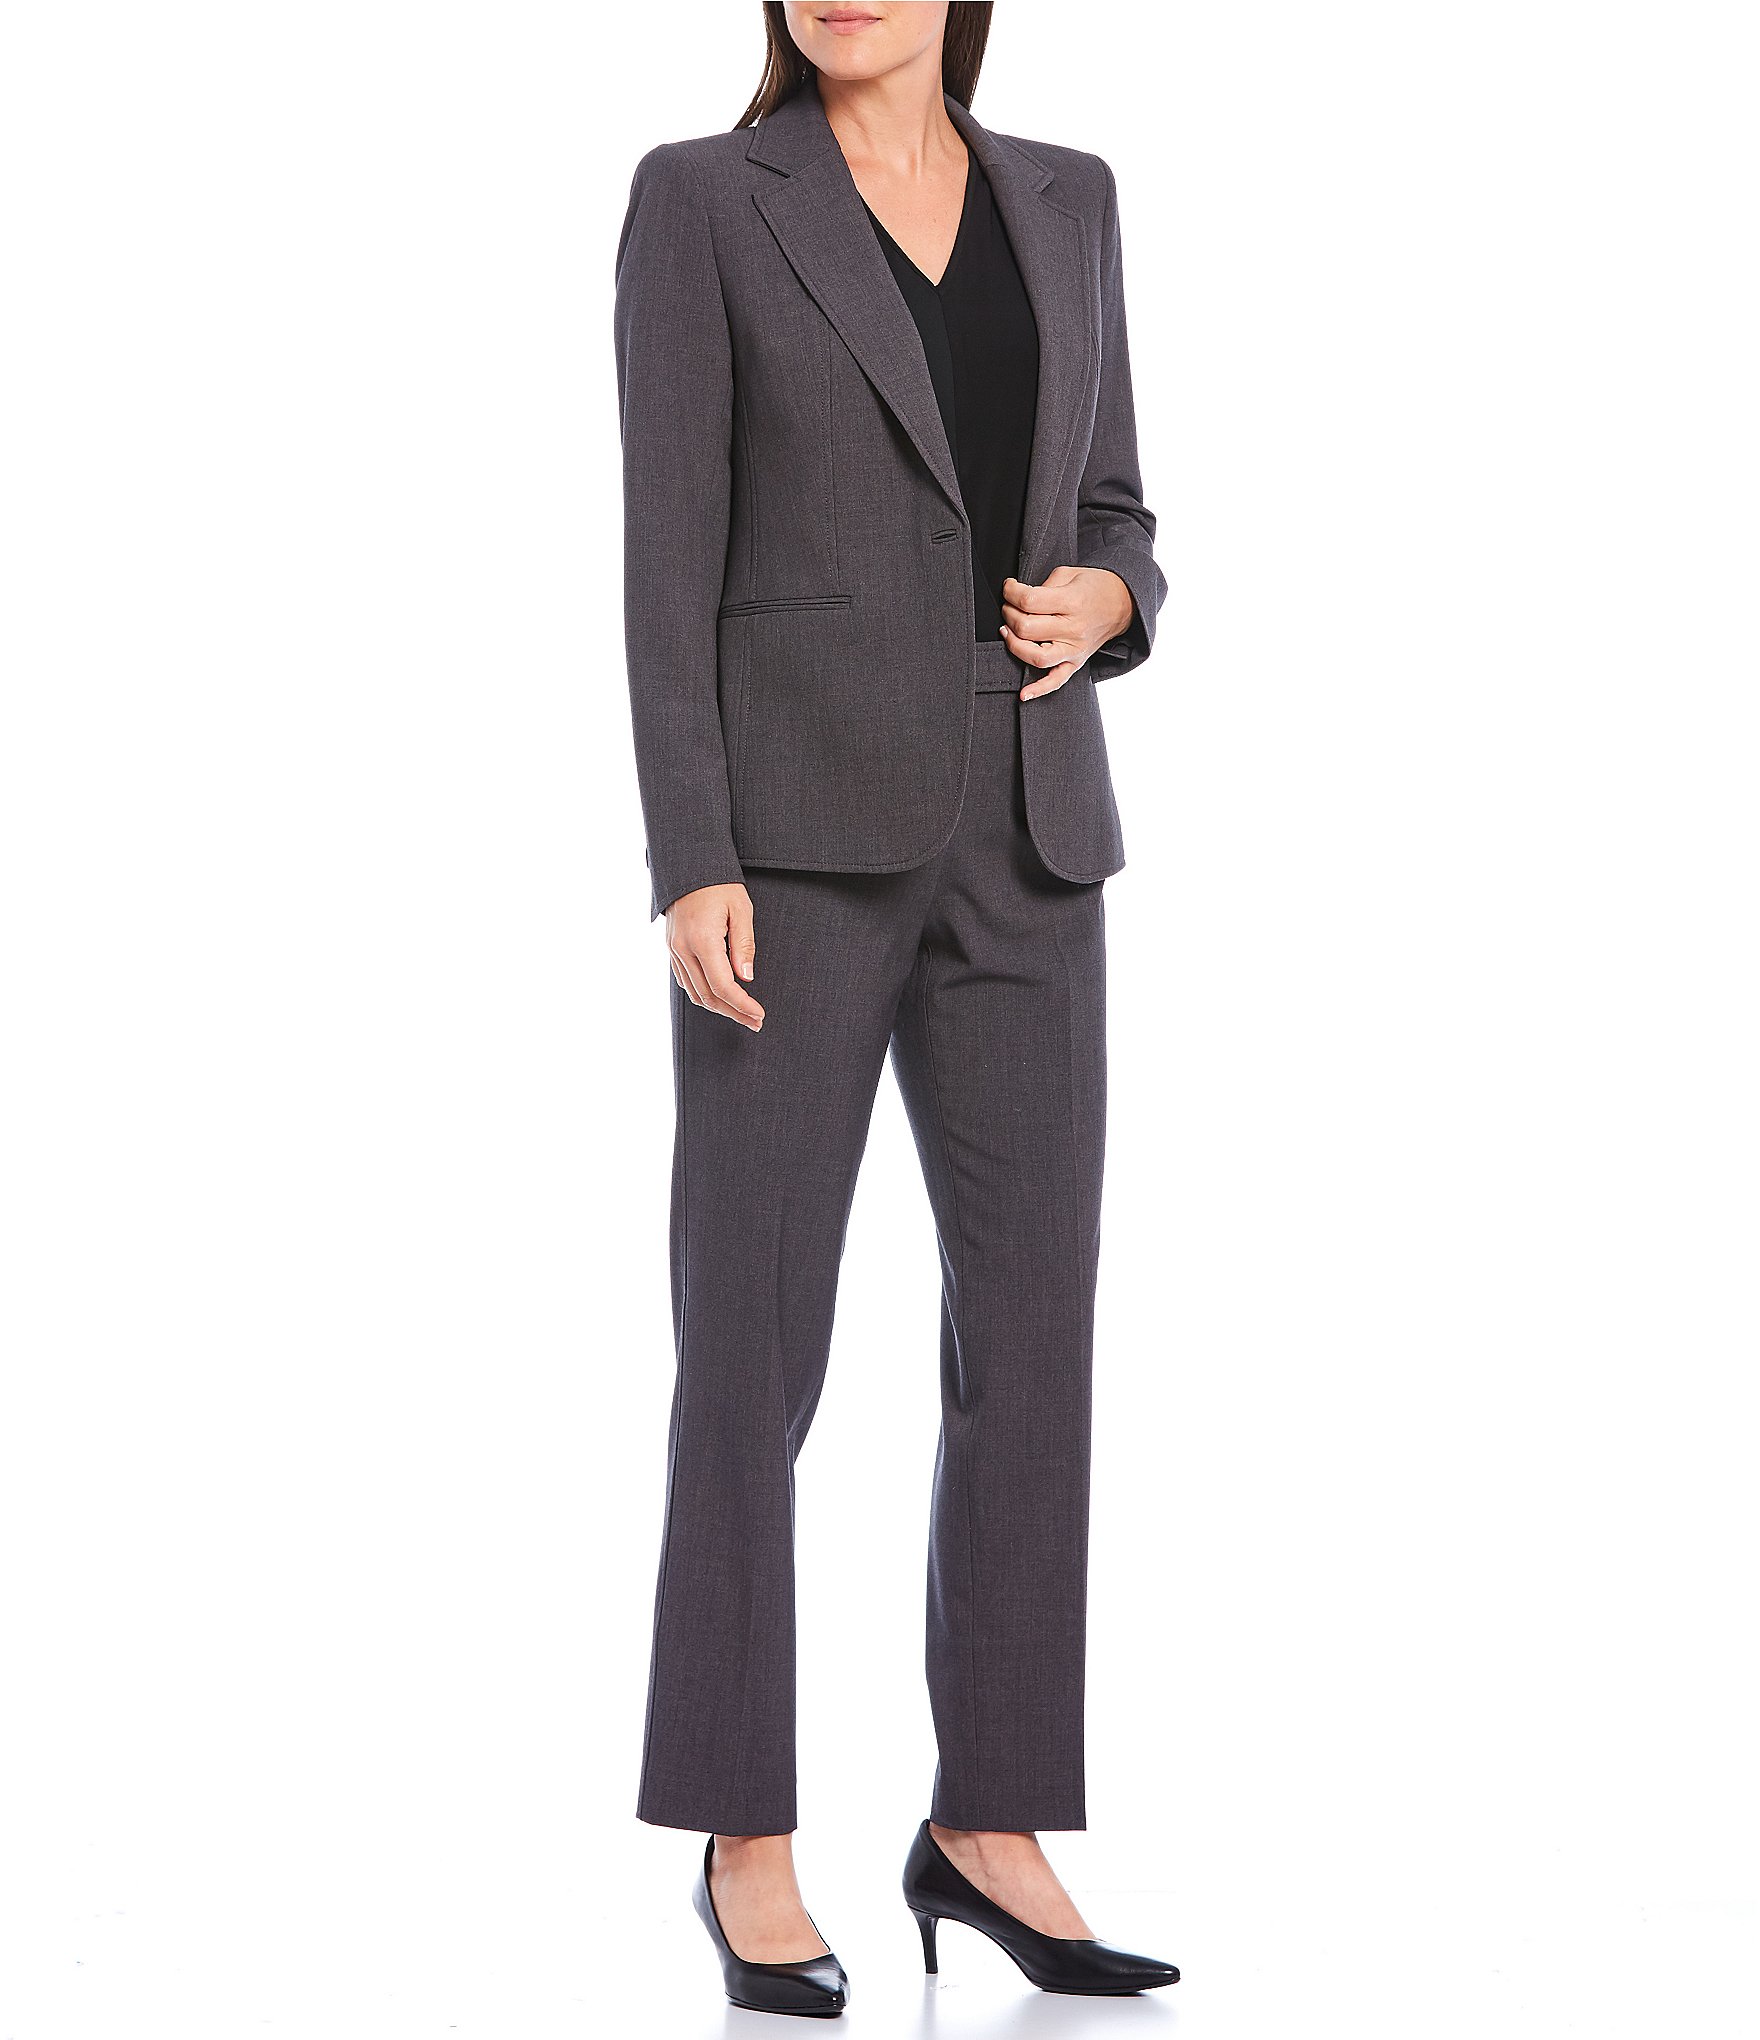 Tahari Asl Bi Stretch 2 Piece Pant Suit, $159, Dillard's